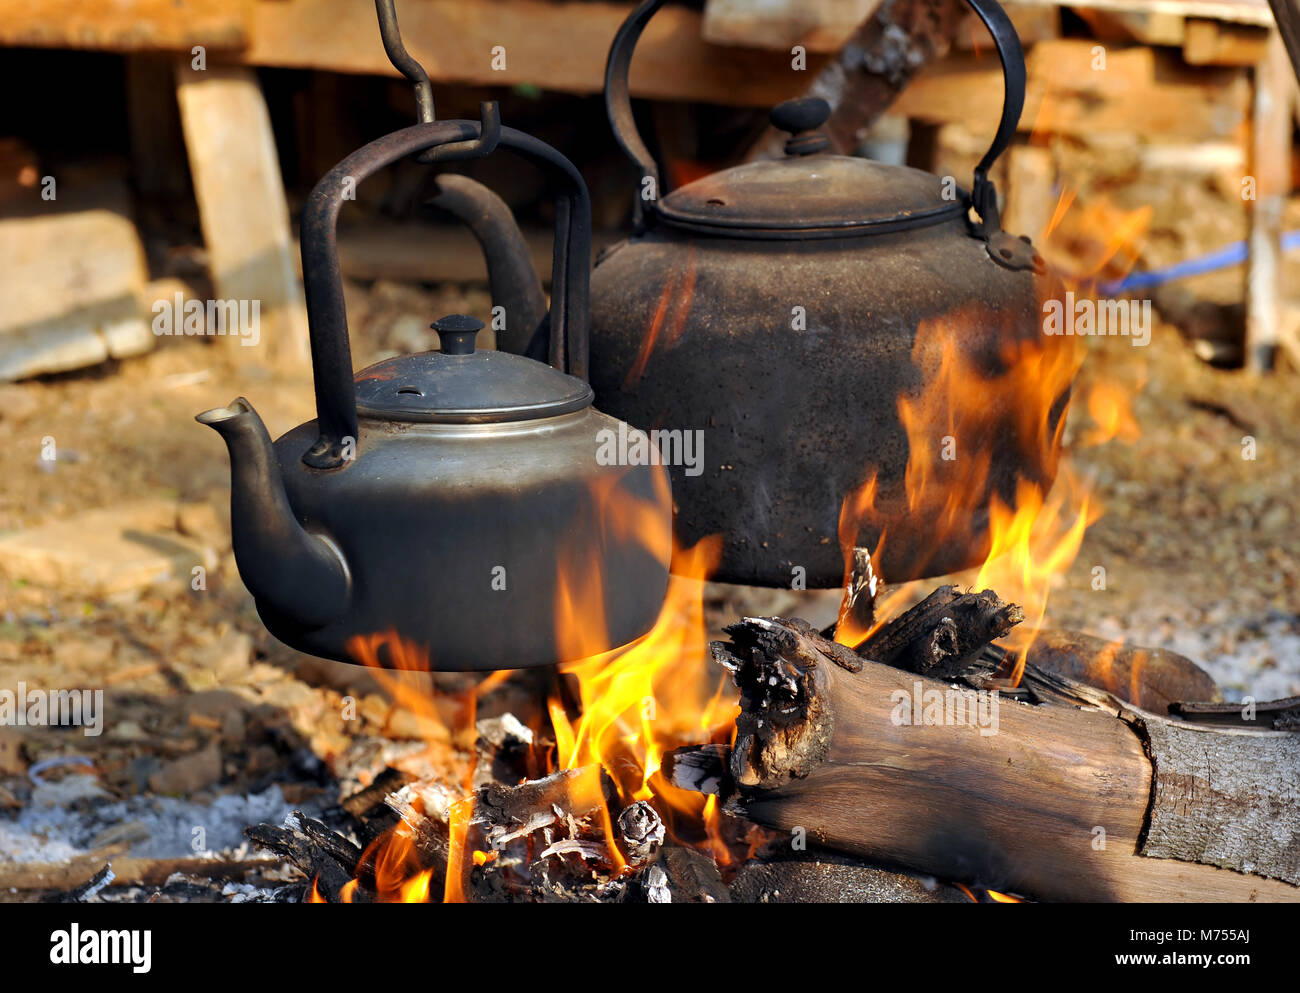 https://c8.alamy.com/comp/M755AJ/kettle-pot-on-fire-for-boiling-the-water-M755AJ.jpg